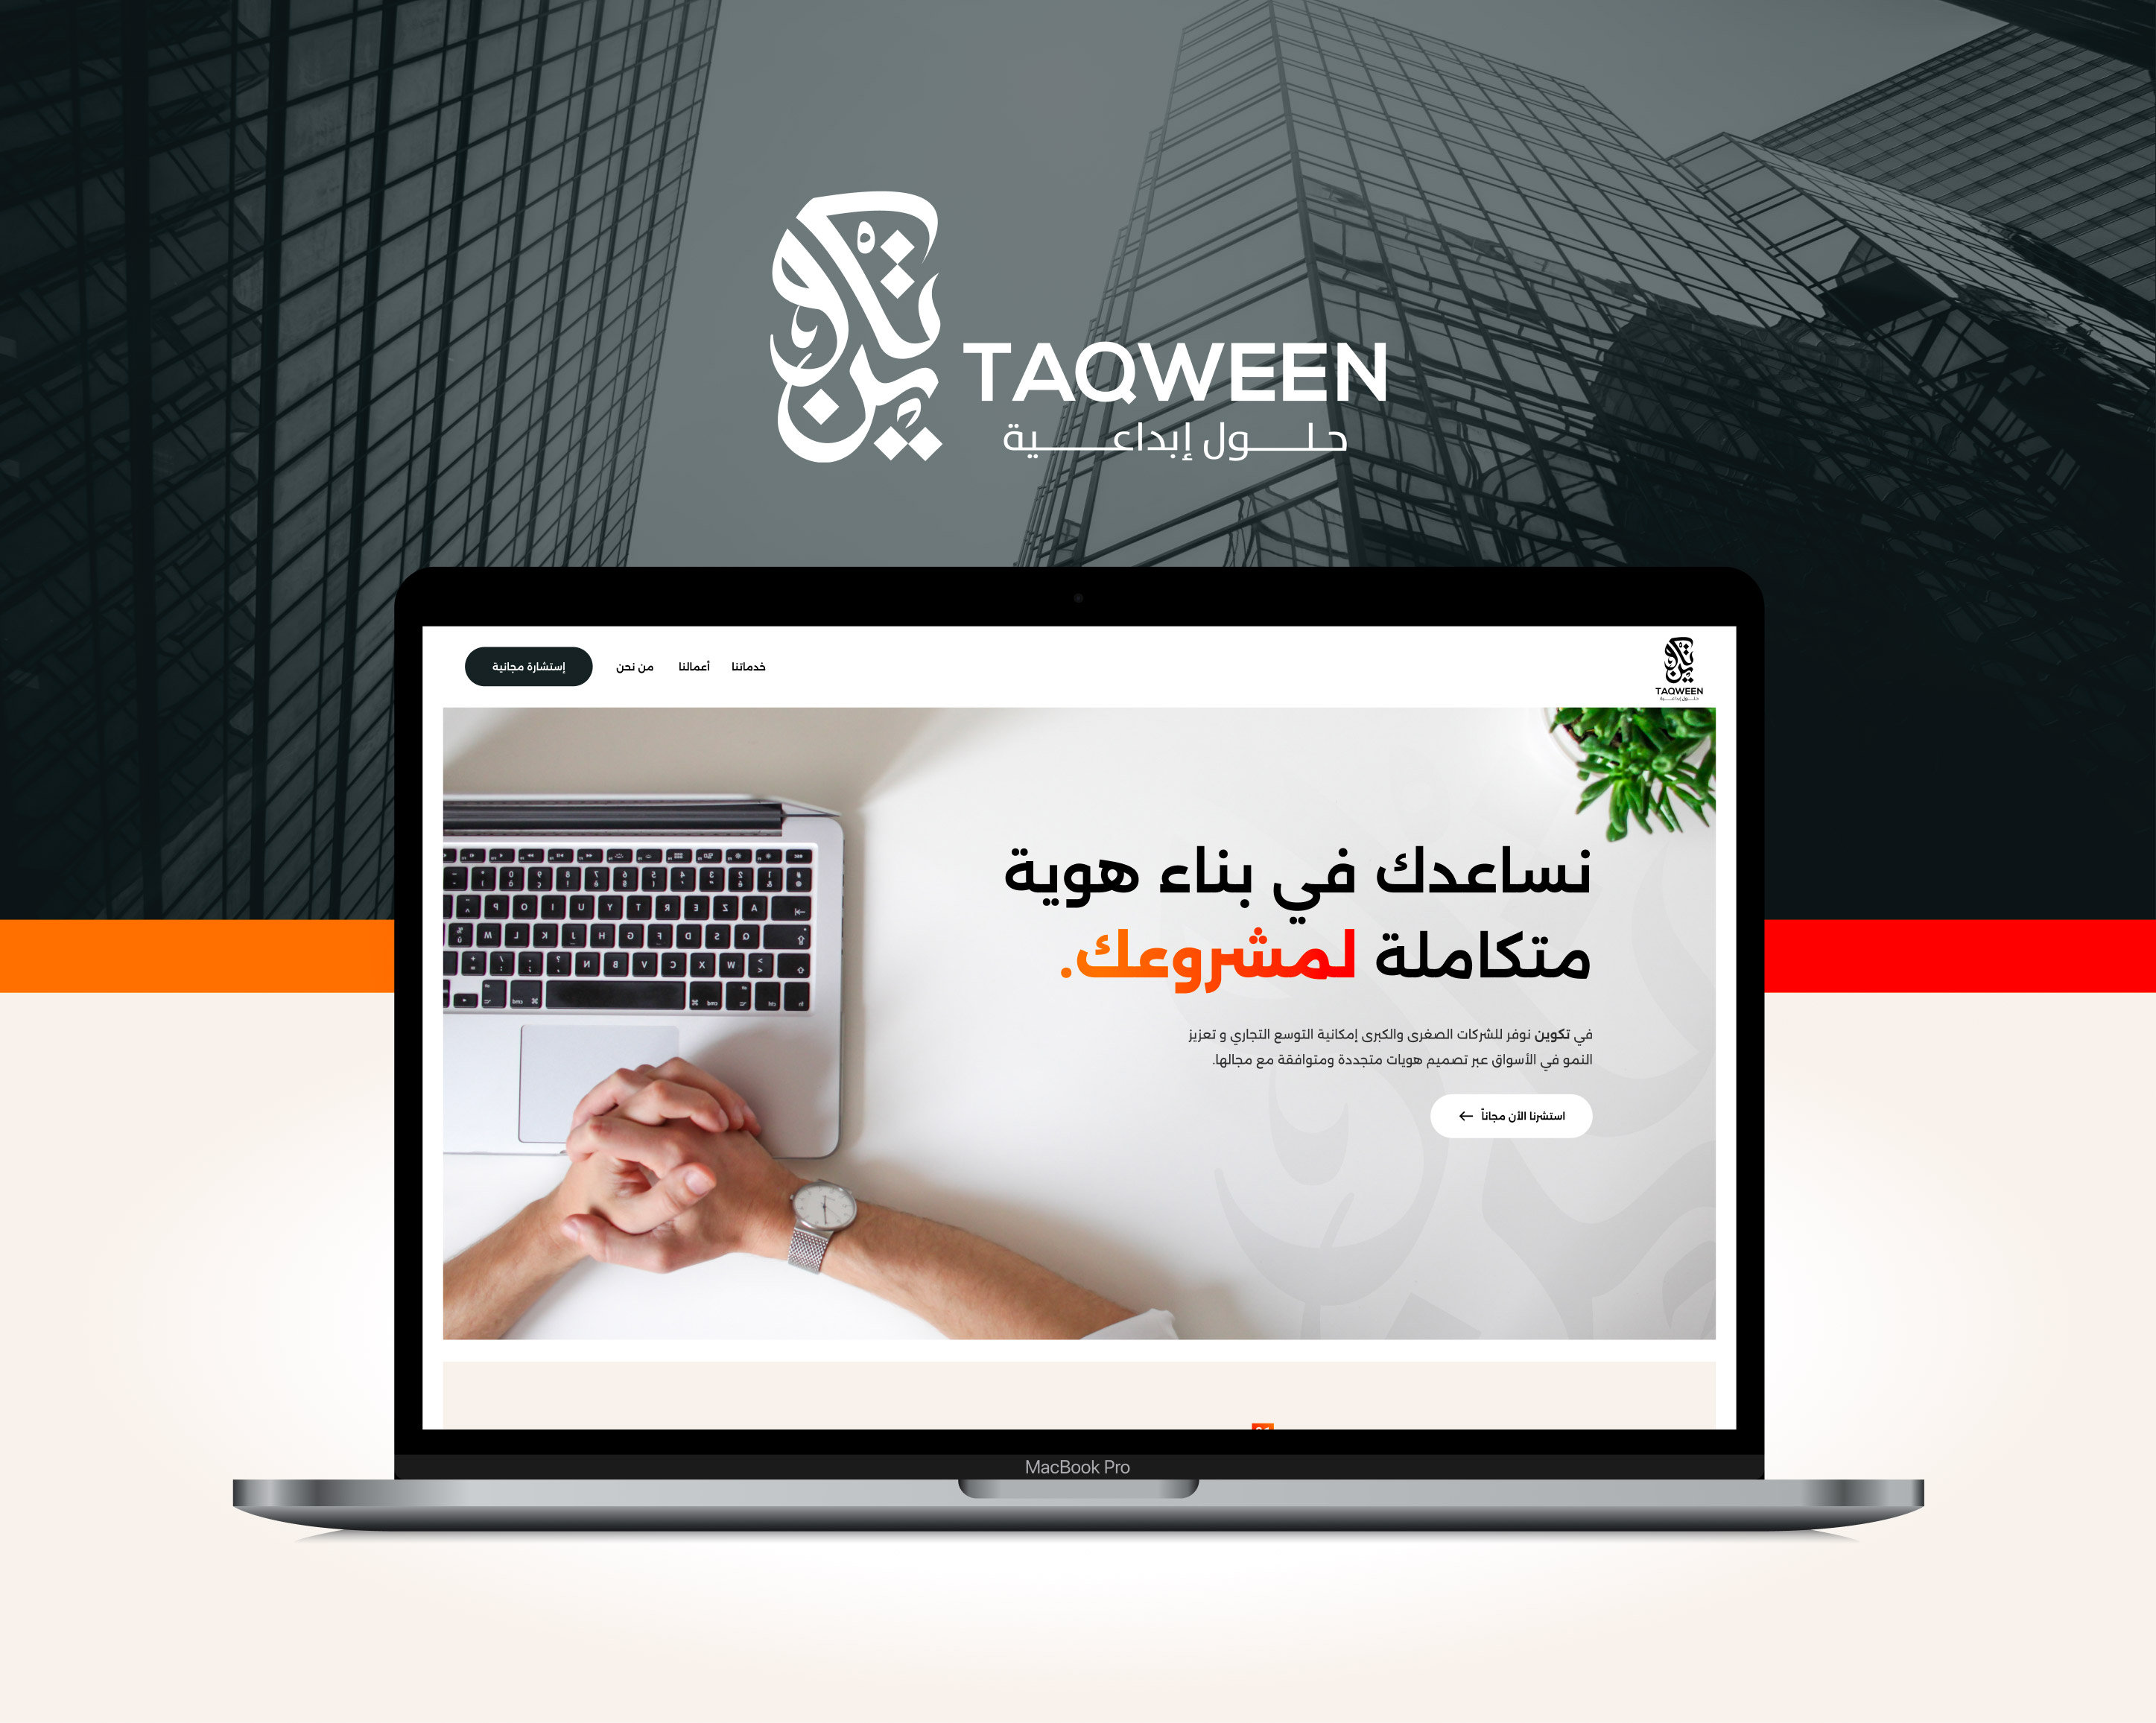 Taqween website case study